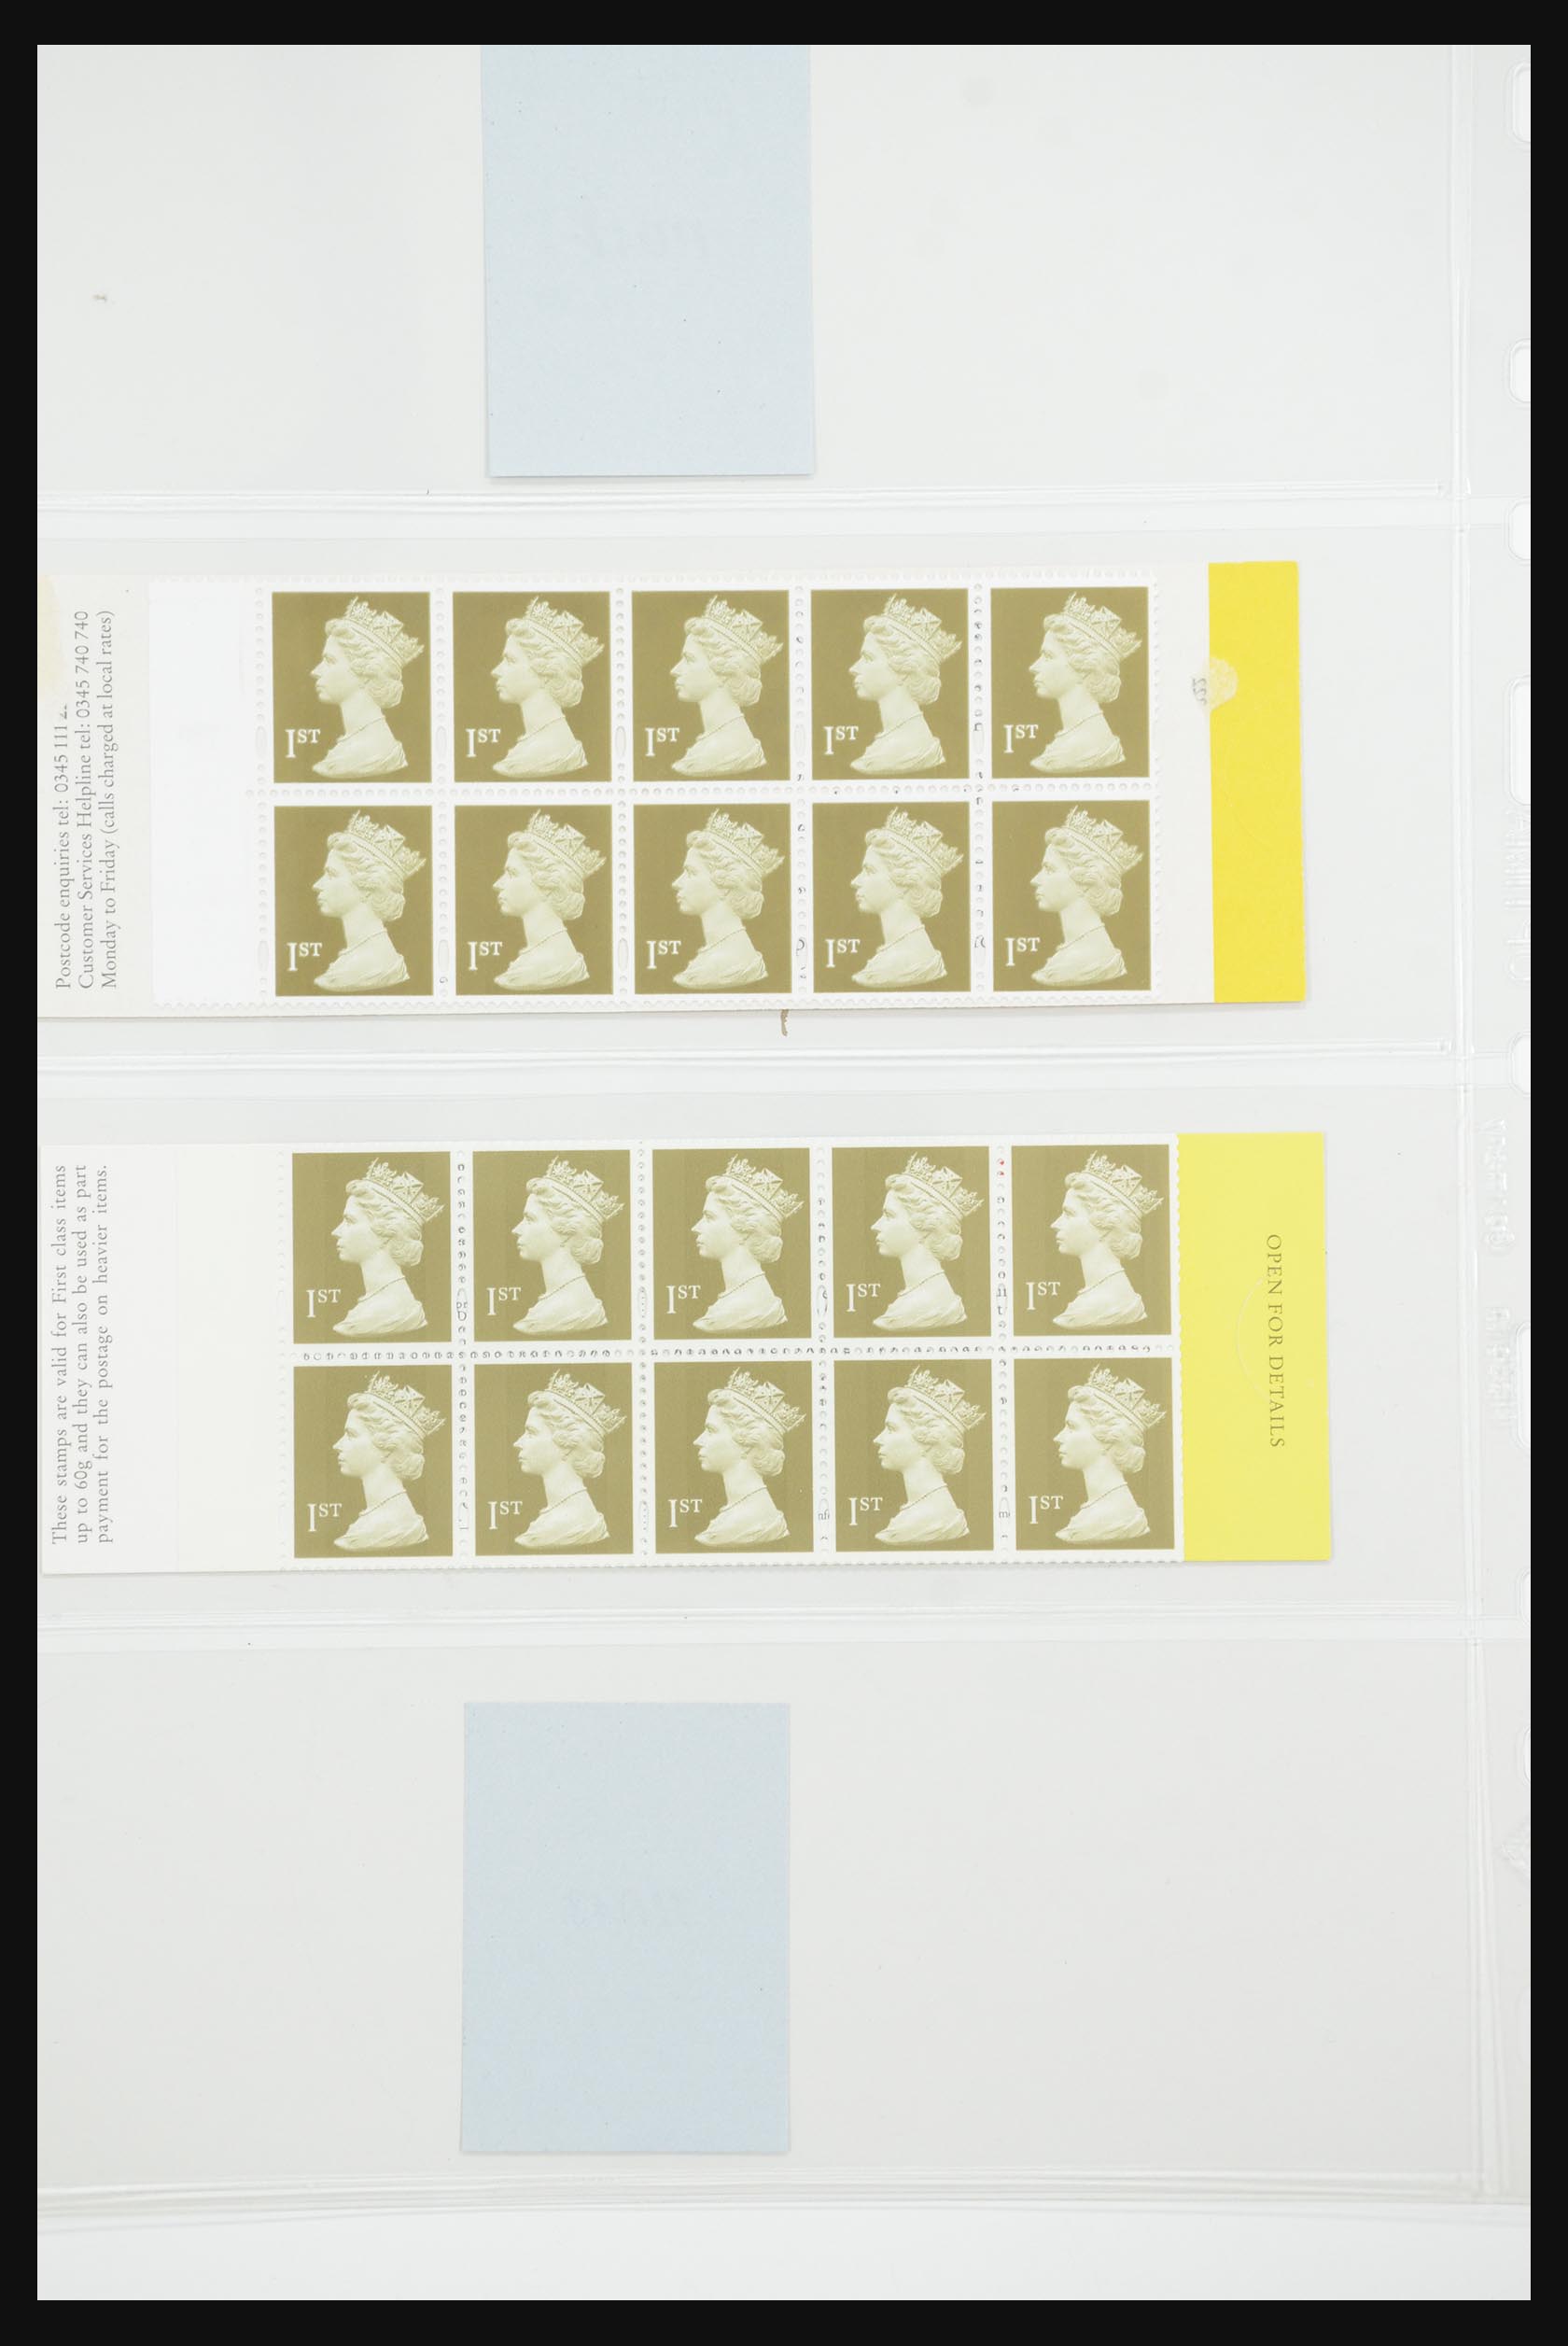 31960 162 - 31960 Great Britain stampbooklets 1989-2000.